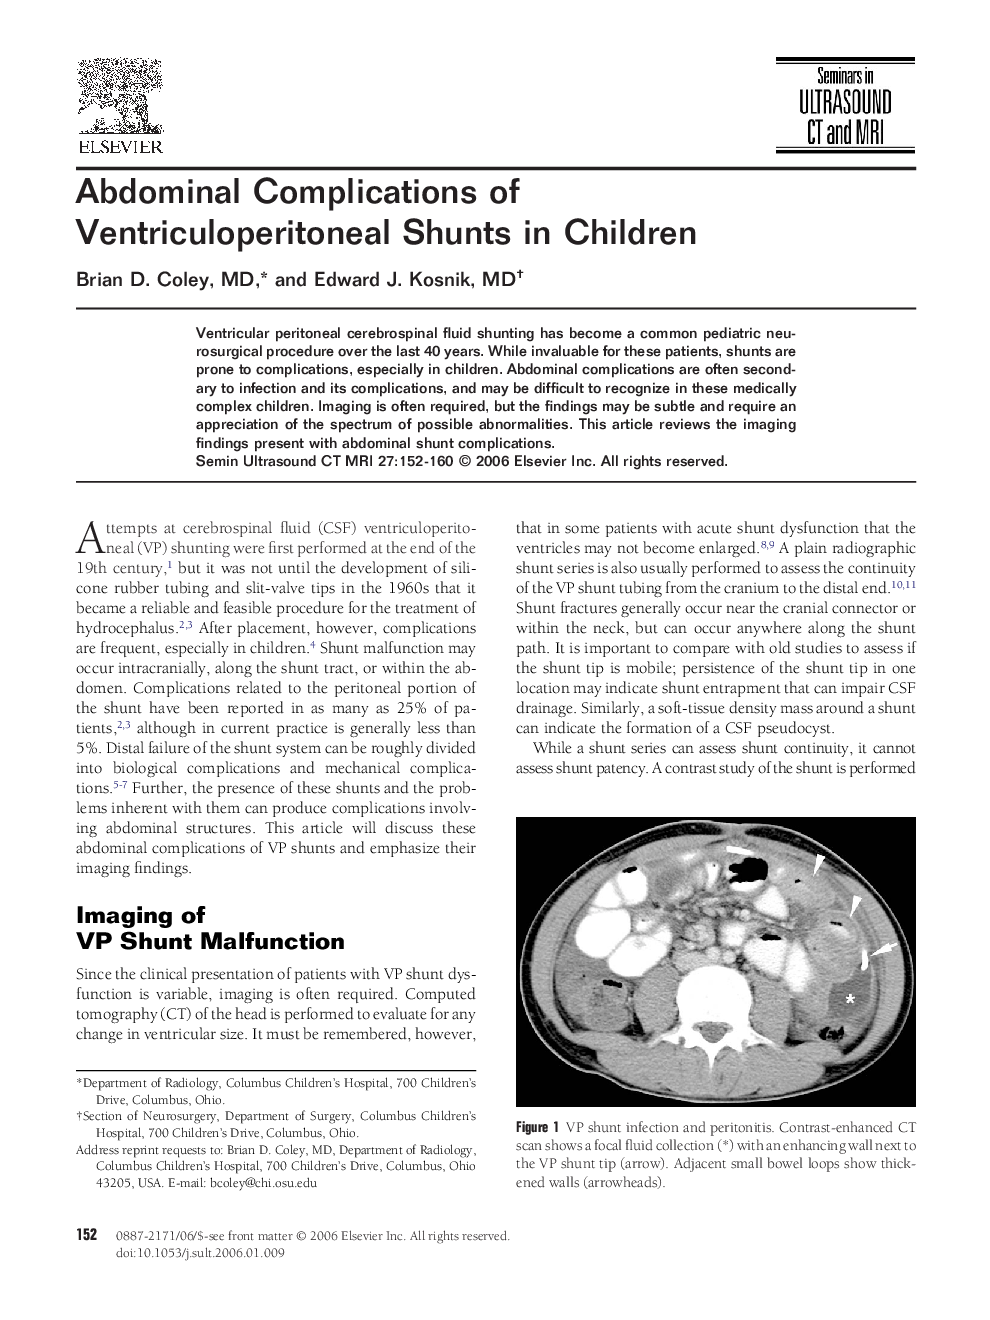 Abdominal Complications of Ventriculoperitoneal Shunts in Children